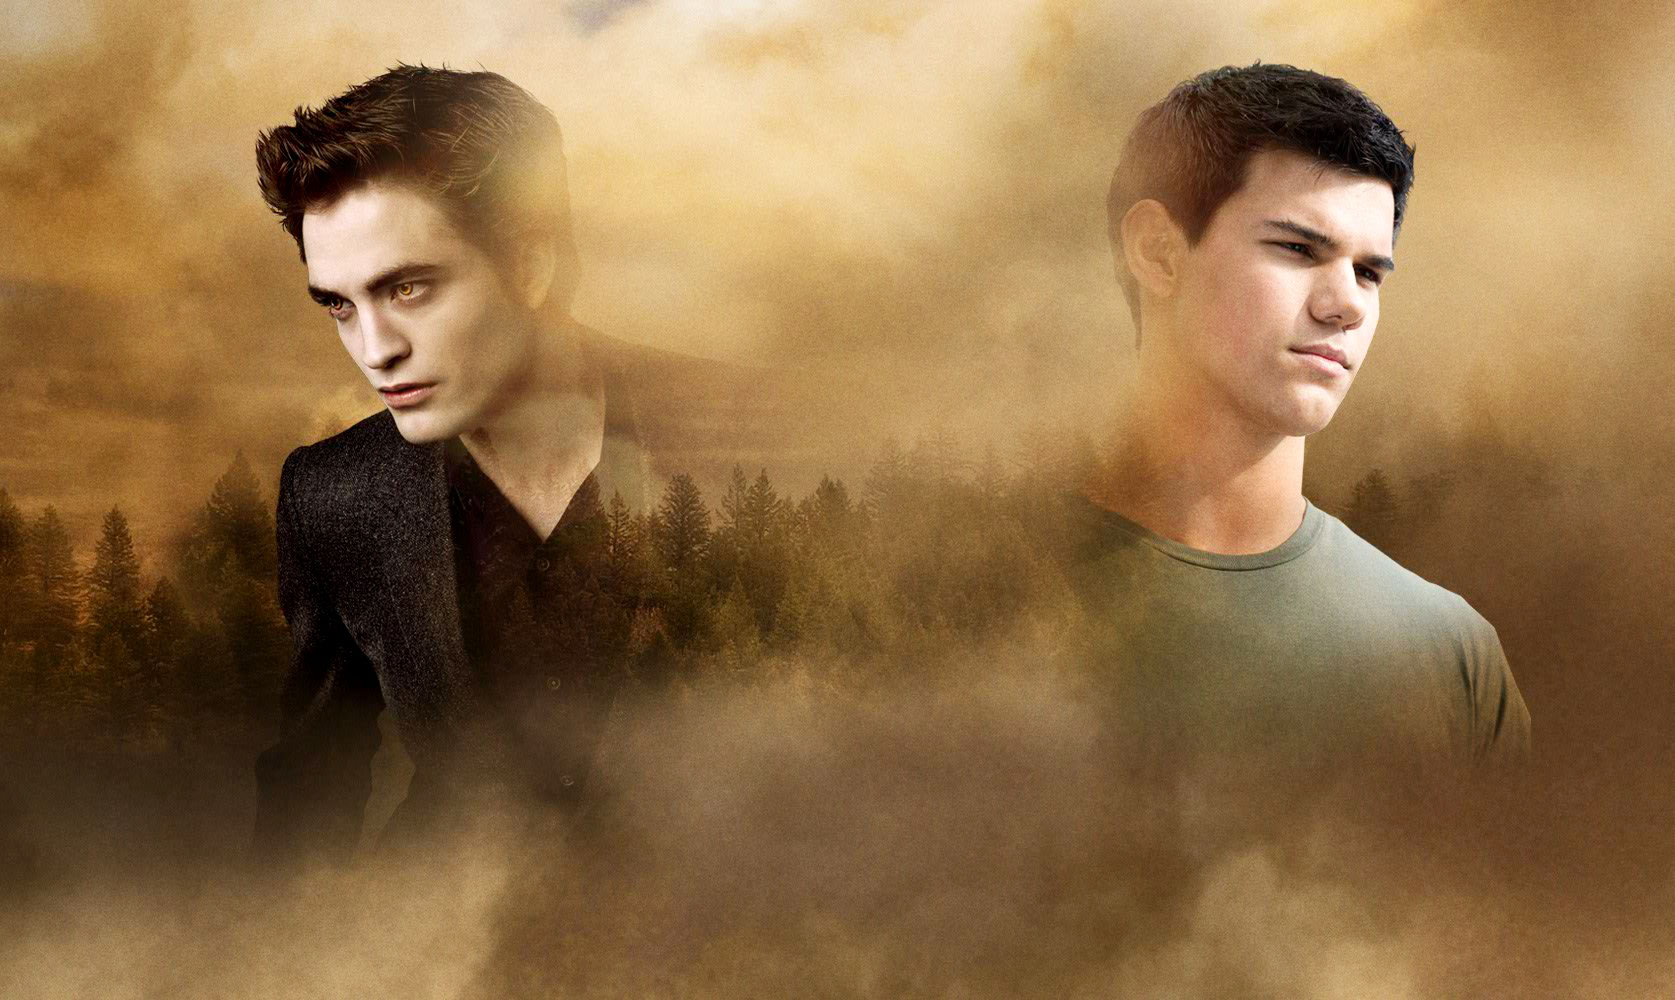 Robert Pattinson stars as Edward Cullen and Taylor Lautner stars as Jacob Black in Summit Entertainment's The Twilight Saga's New Moon (2009)